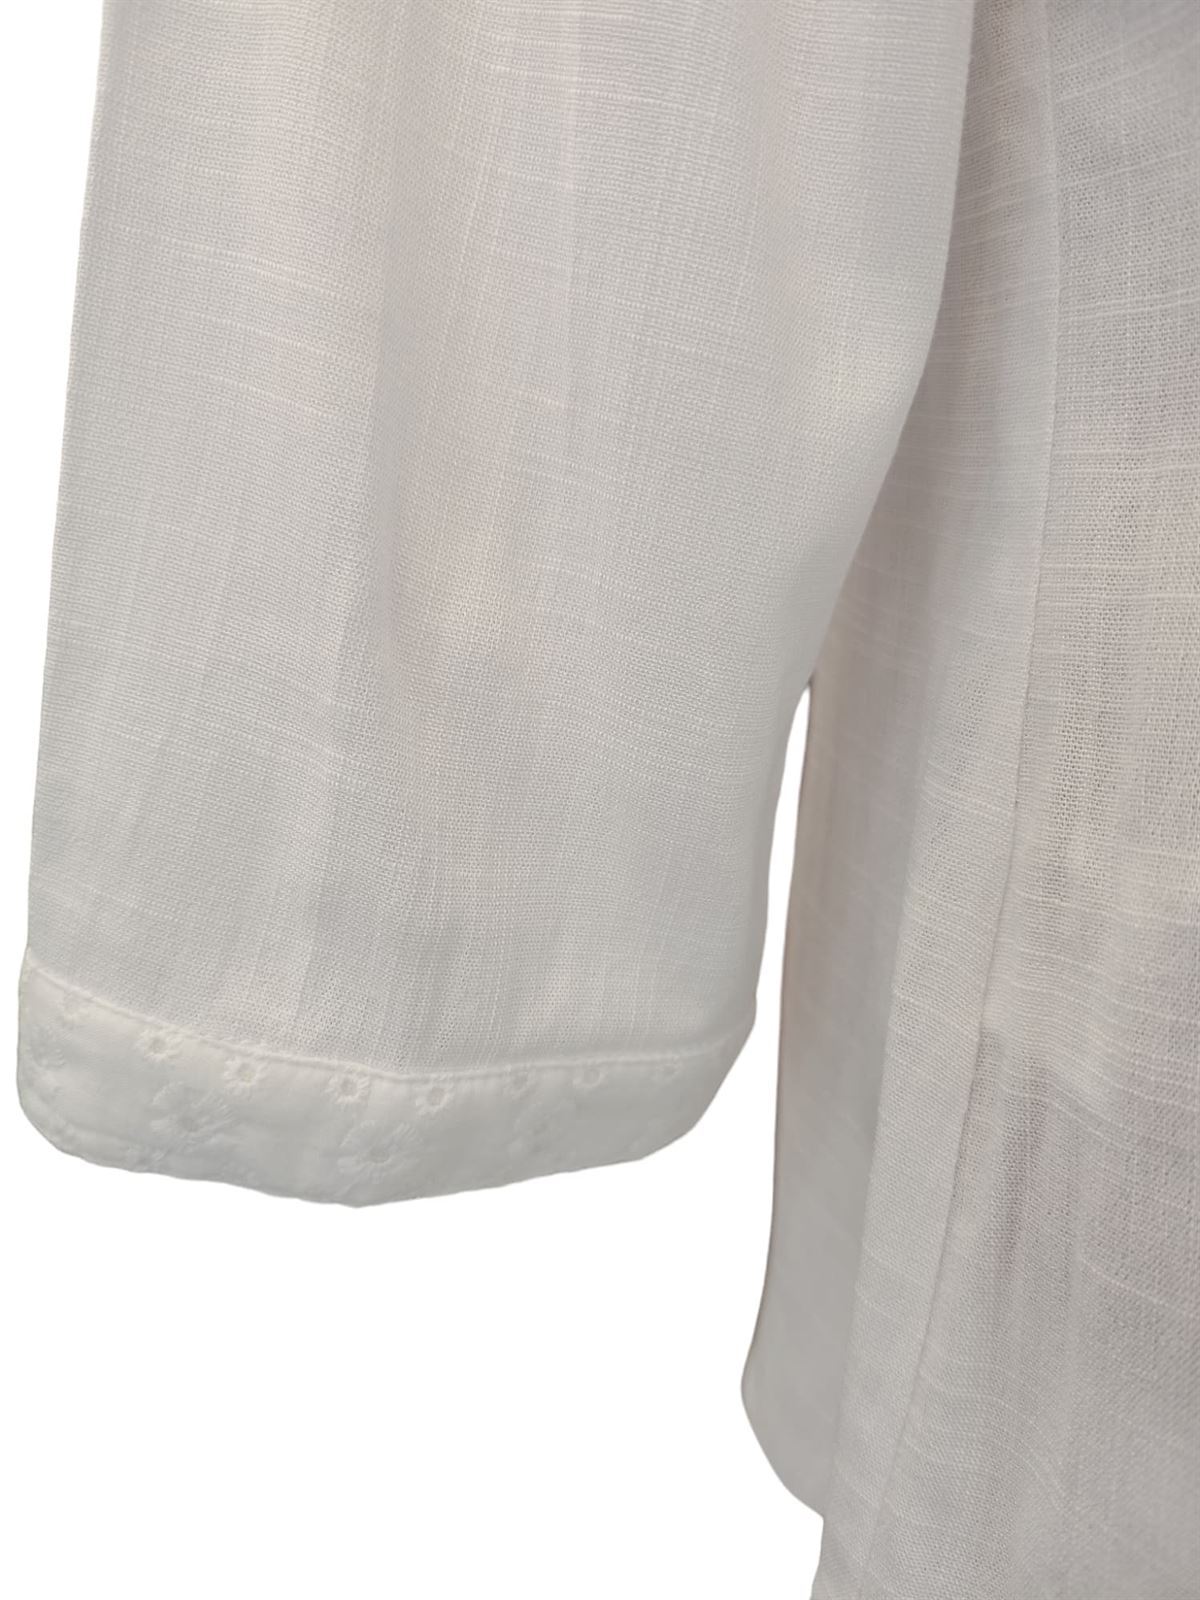 Camisa manga tres cuartos blanca calada con forro - Imagen 6